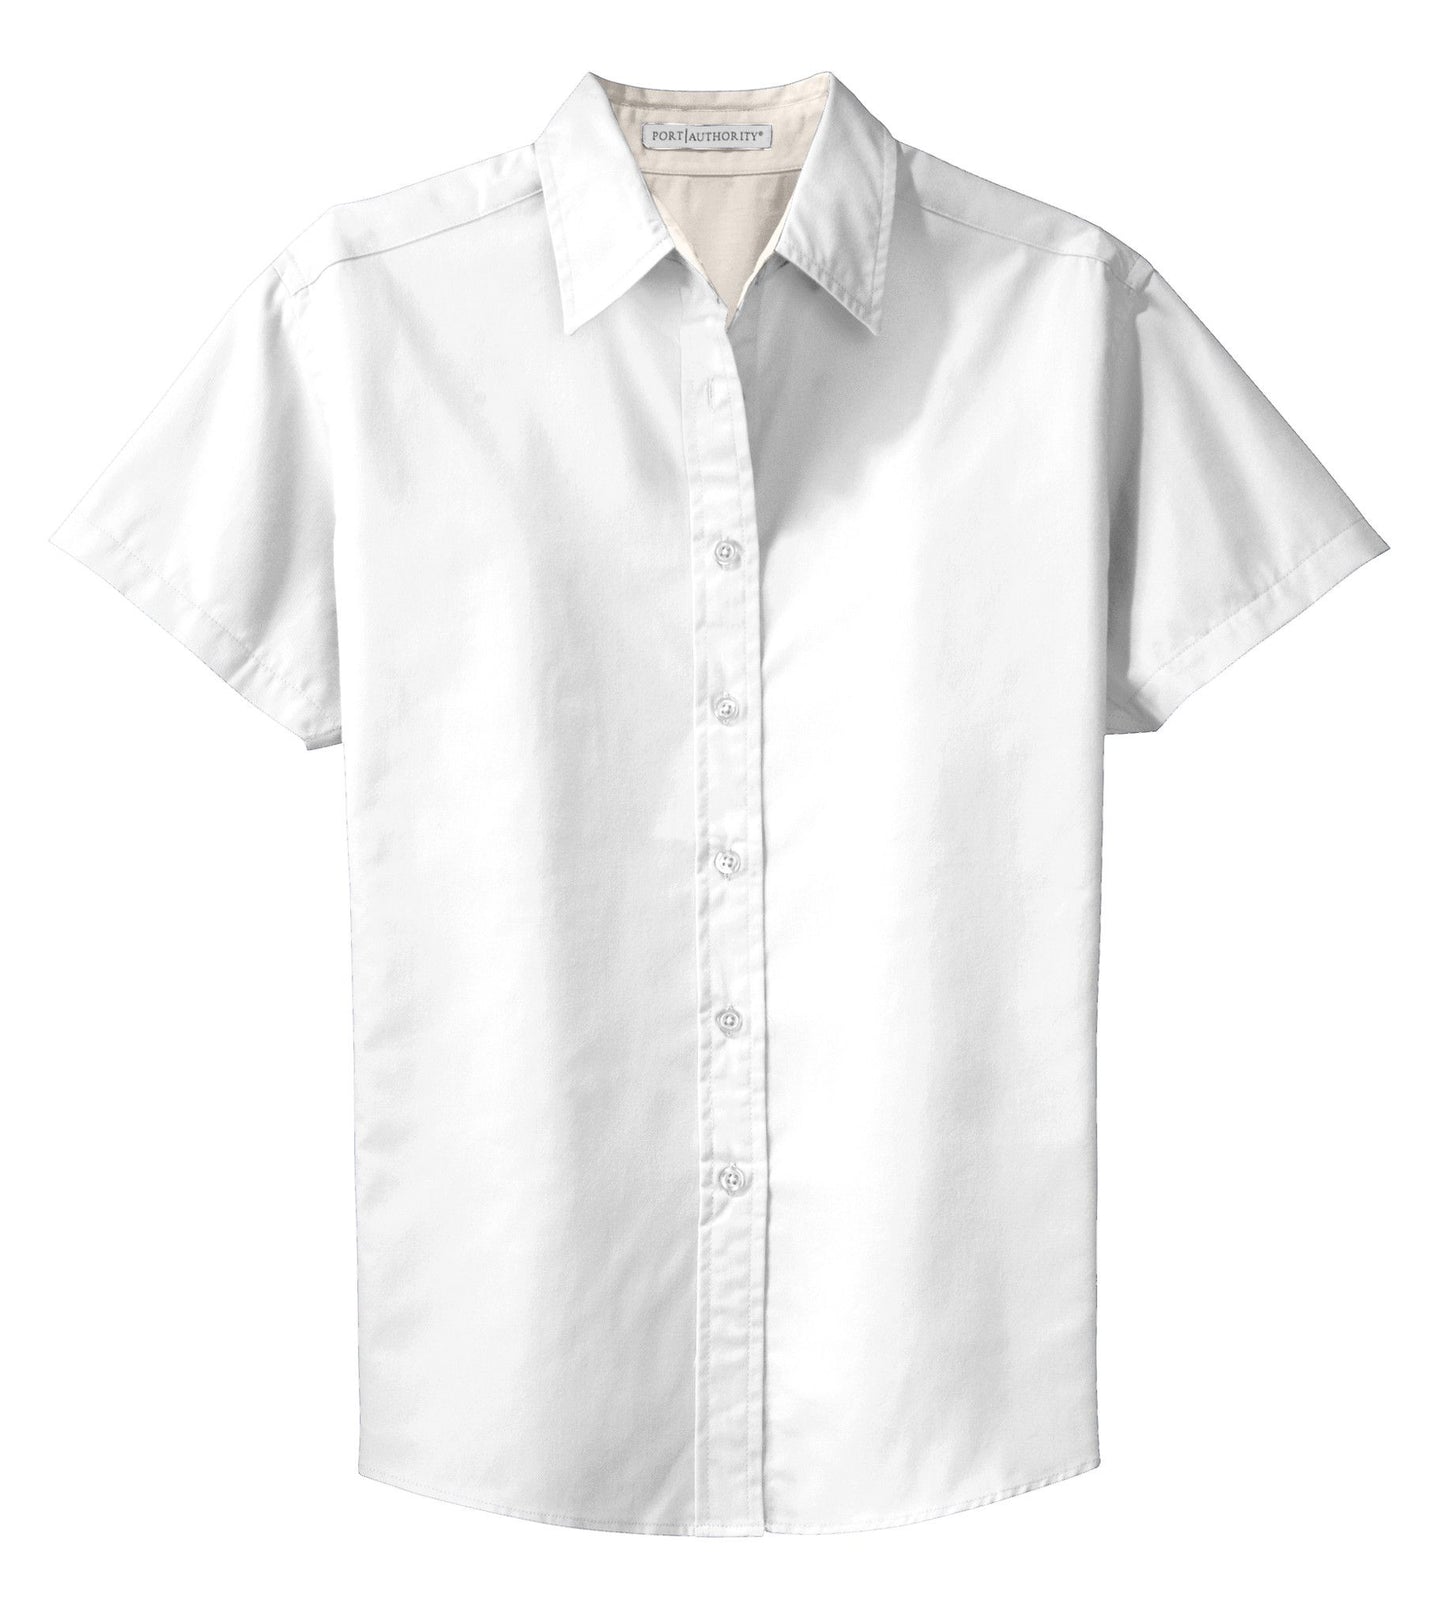 Port Authority® Ladies Short Sleeve Easy Care Shirt (Light Colors) L508